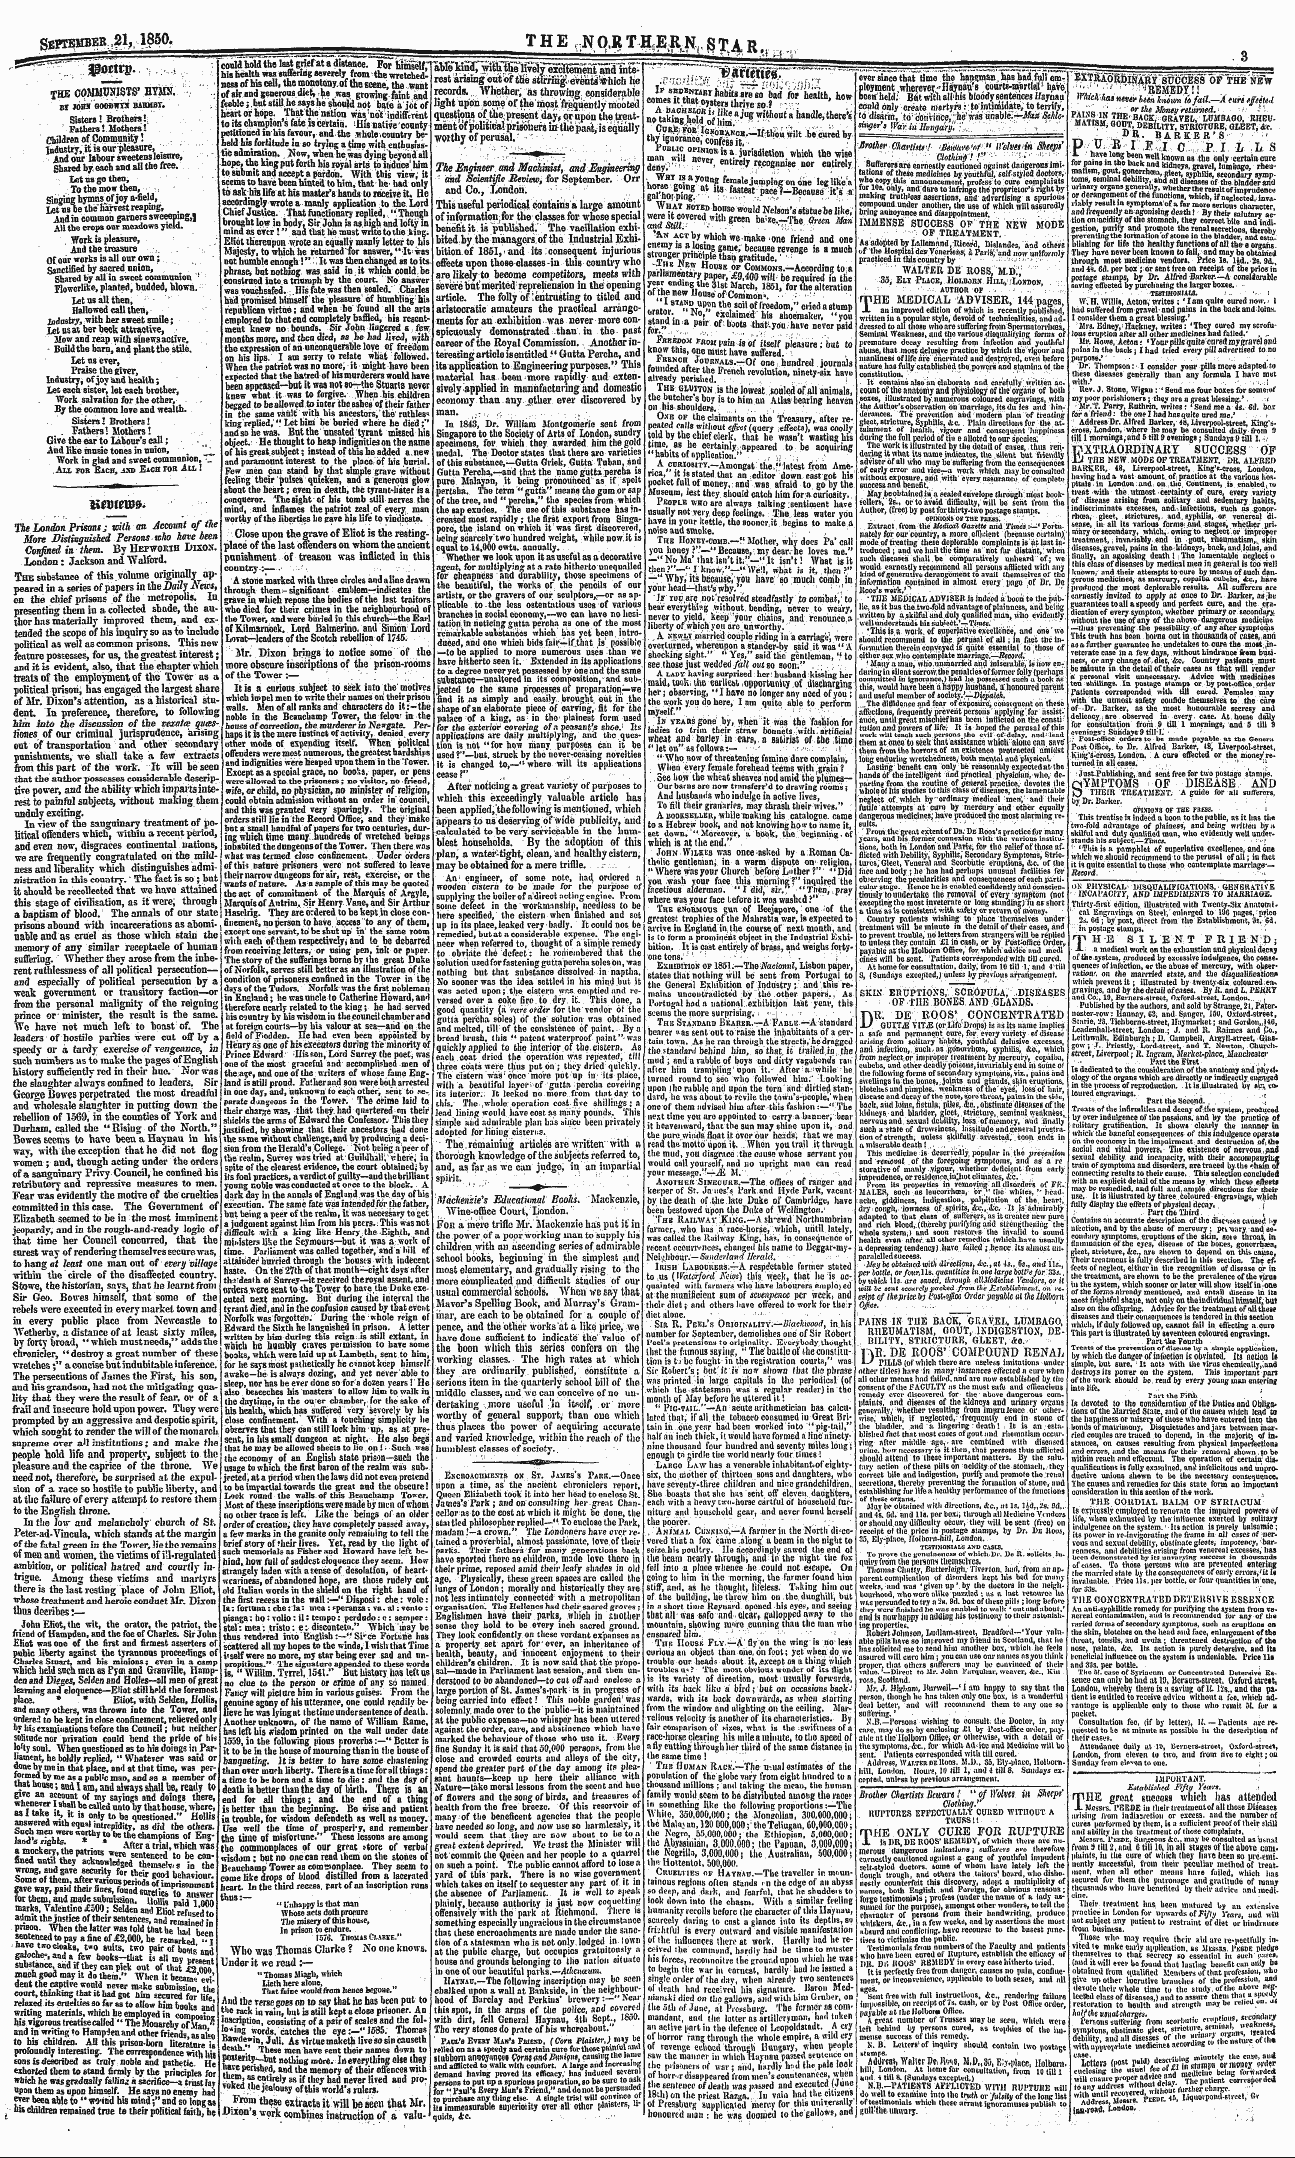 Northern Star (1837-1852): jS F Y, 3rd edition - Ad00319